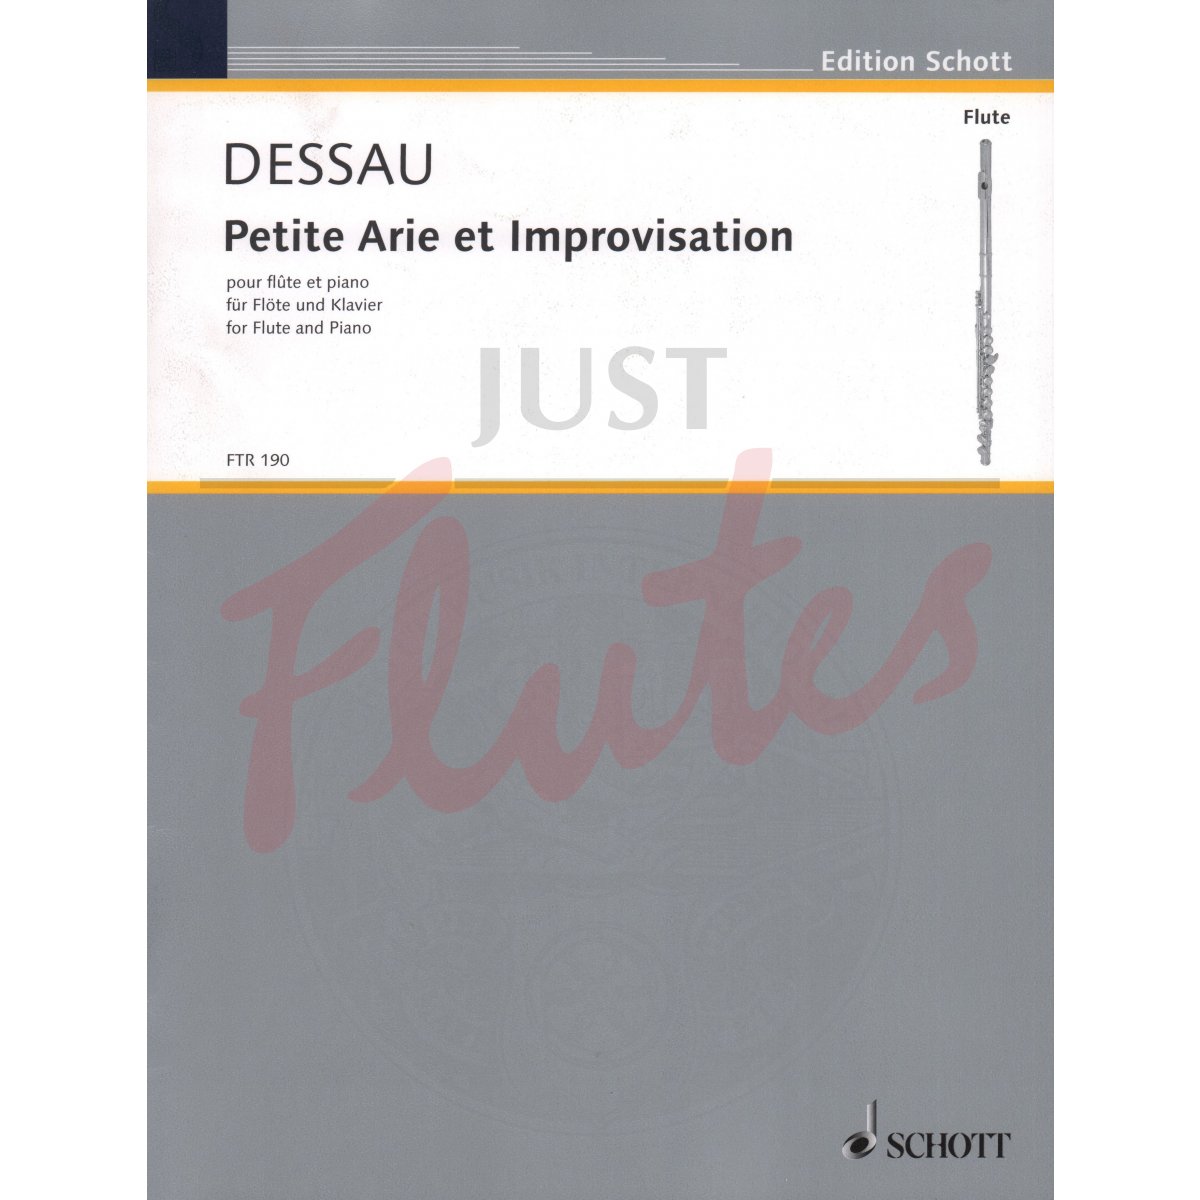 Petite Arie et Improvisation for Flute and Piano